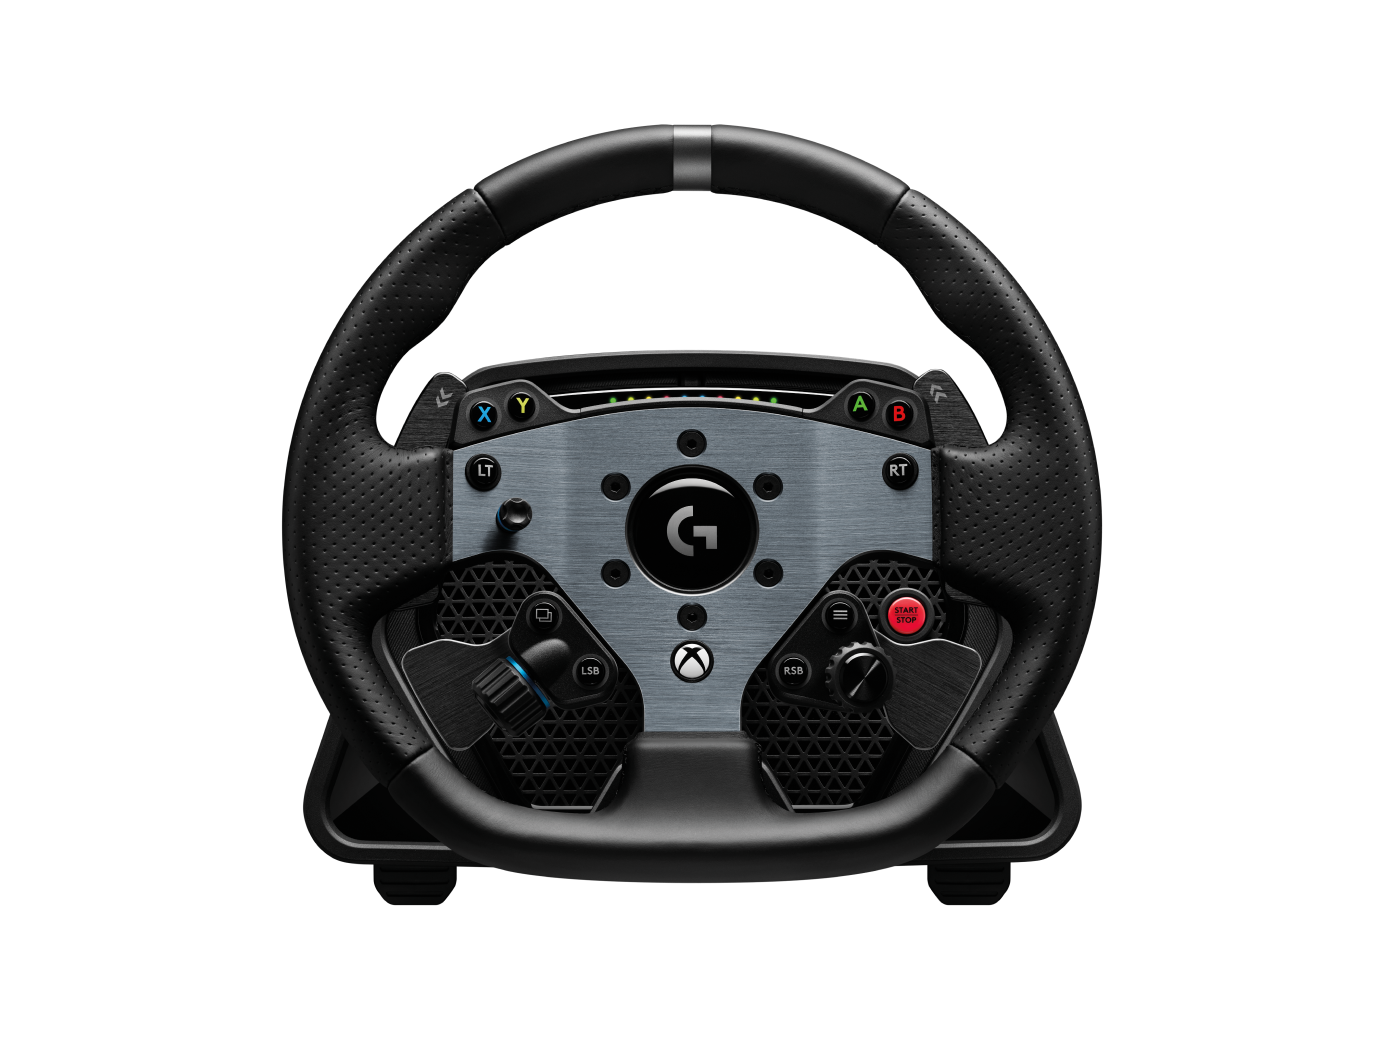 Hen Bake Misfortune PRO Racing Wheel for Playstation, Xbox, PC | Logitech G